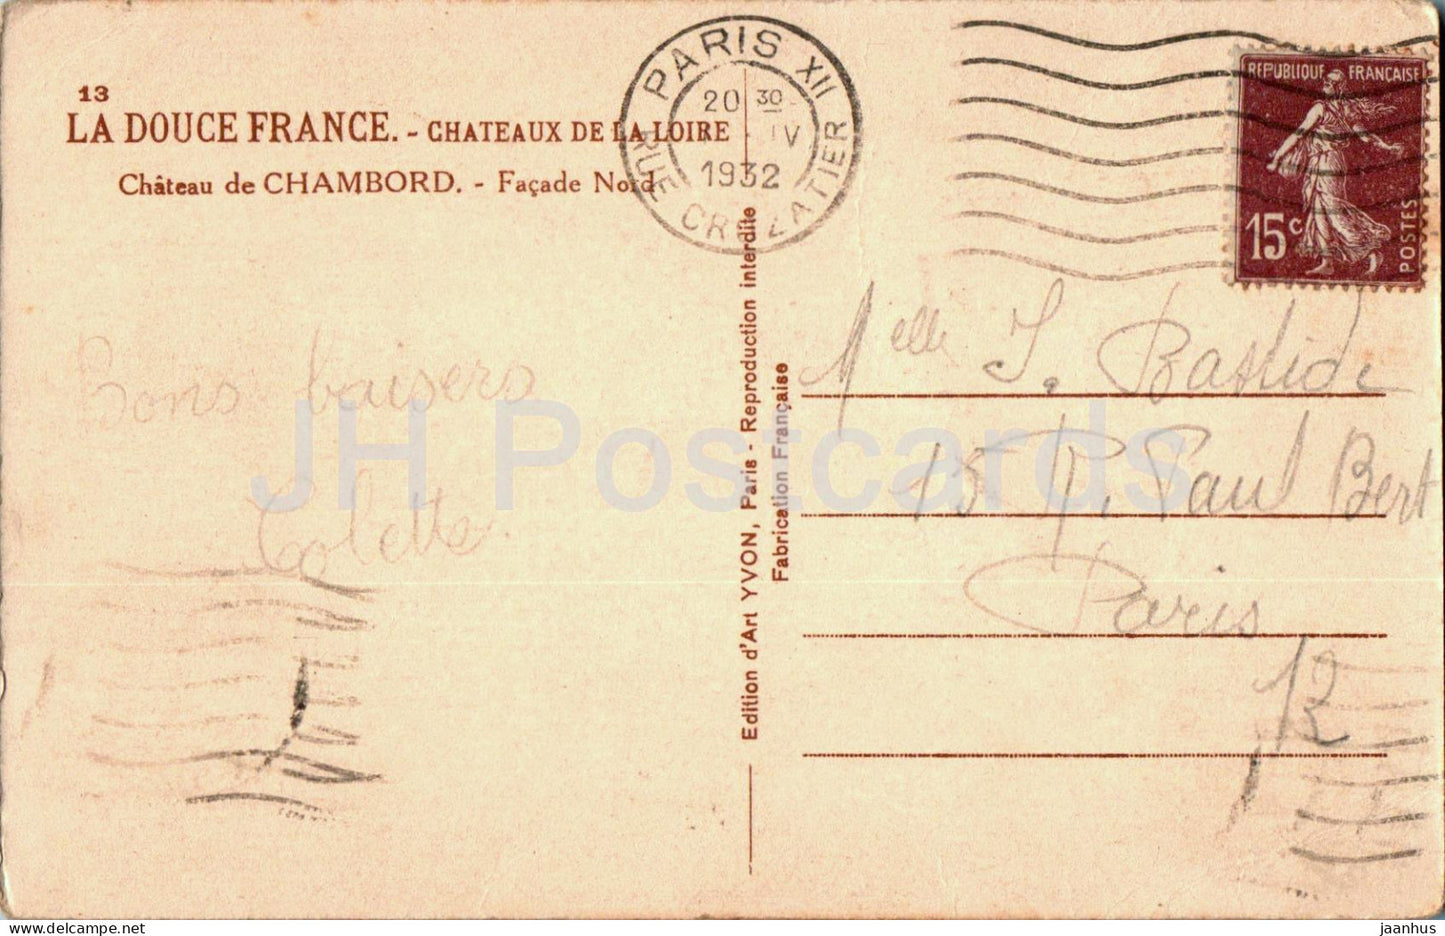 Chateau de Chambord - Fassade Nord - Chateaux de La Loire - 13 - alte Postkarte - 1932 - Frankreich - gebraucht 